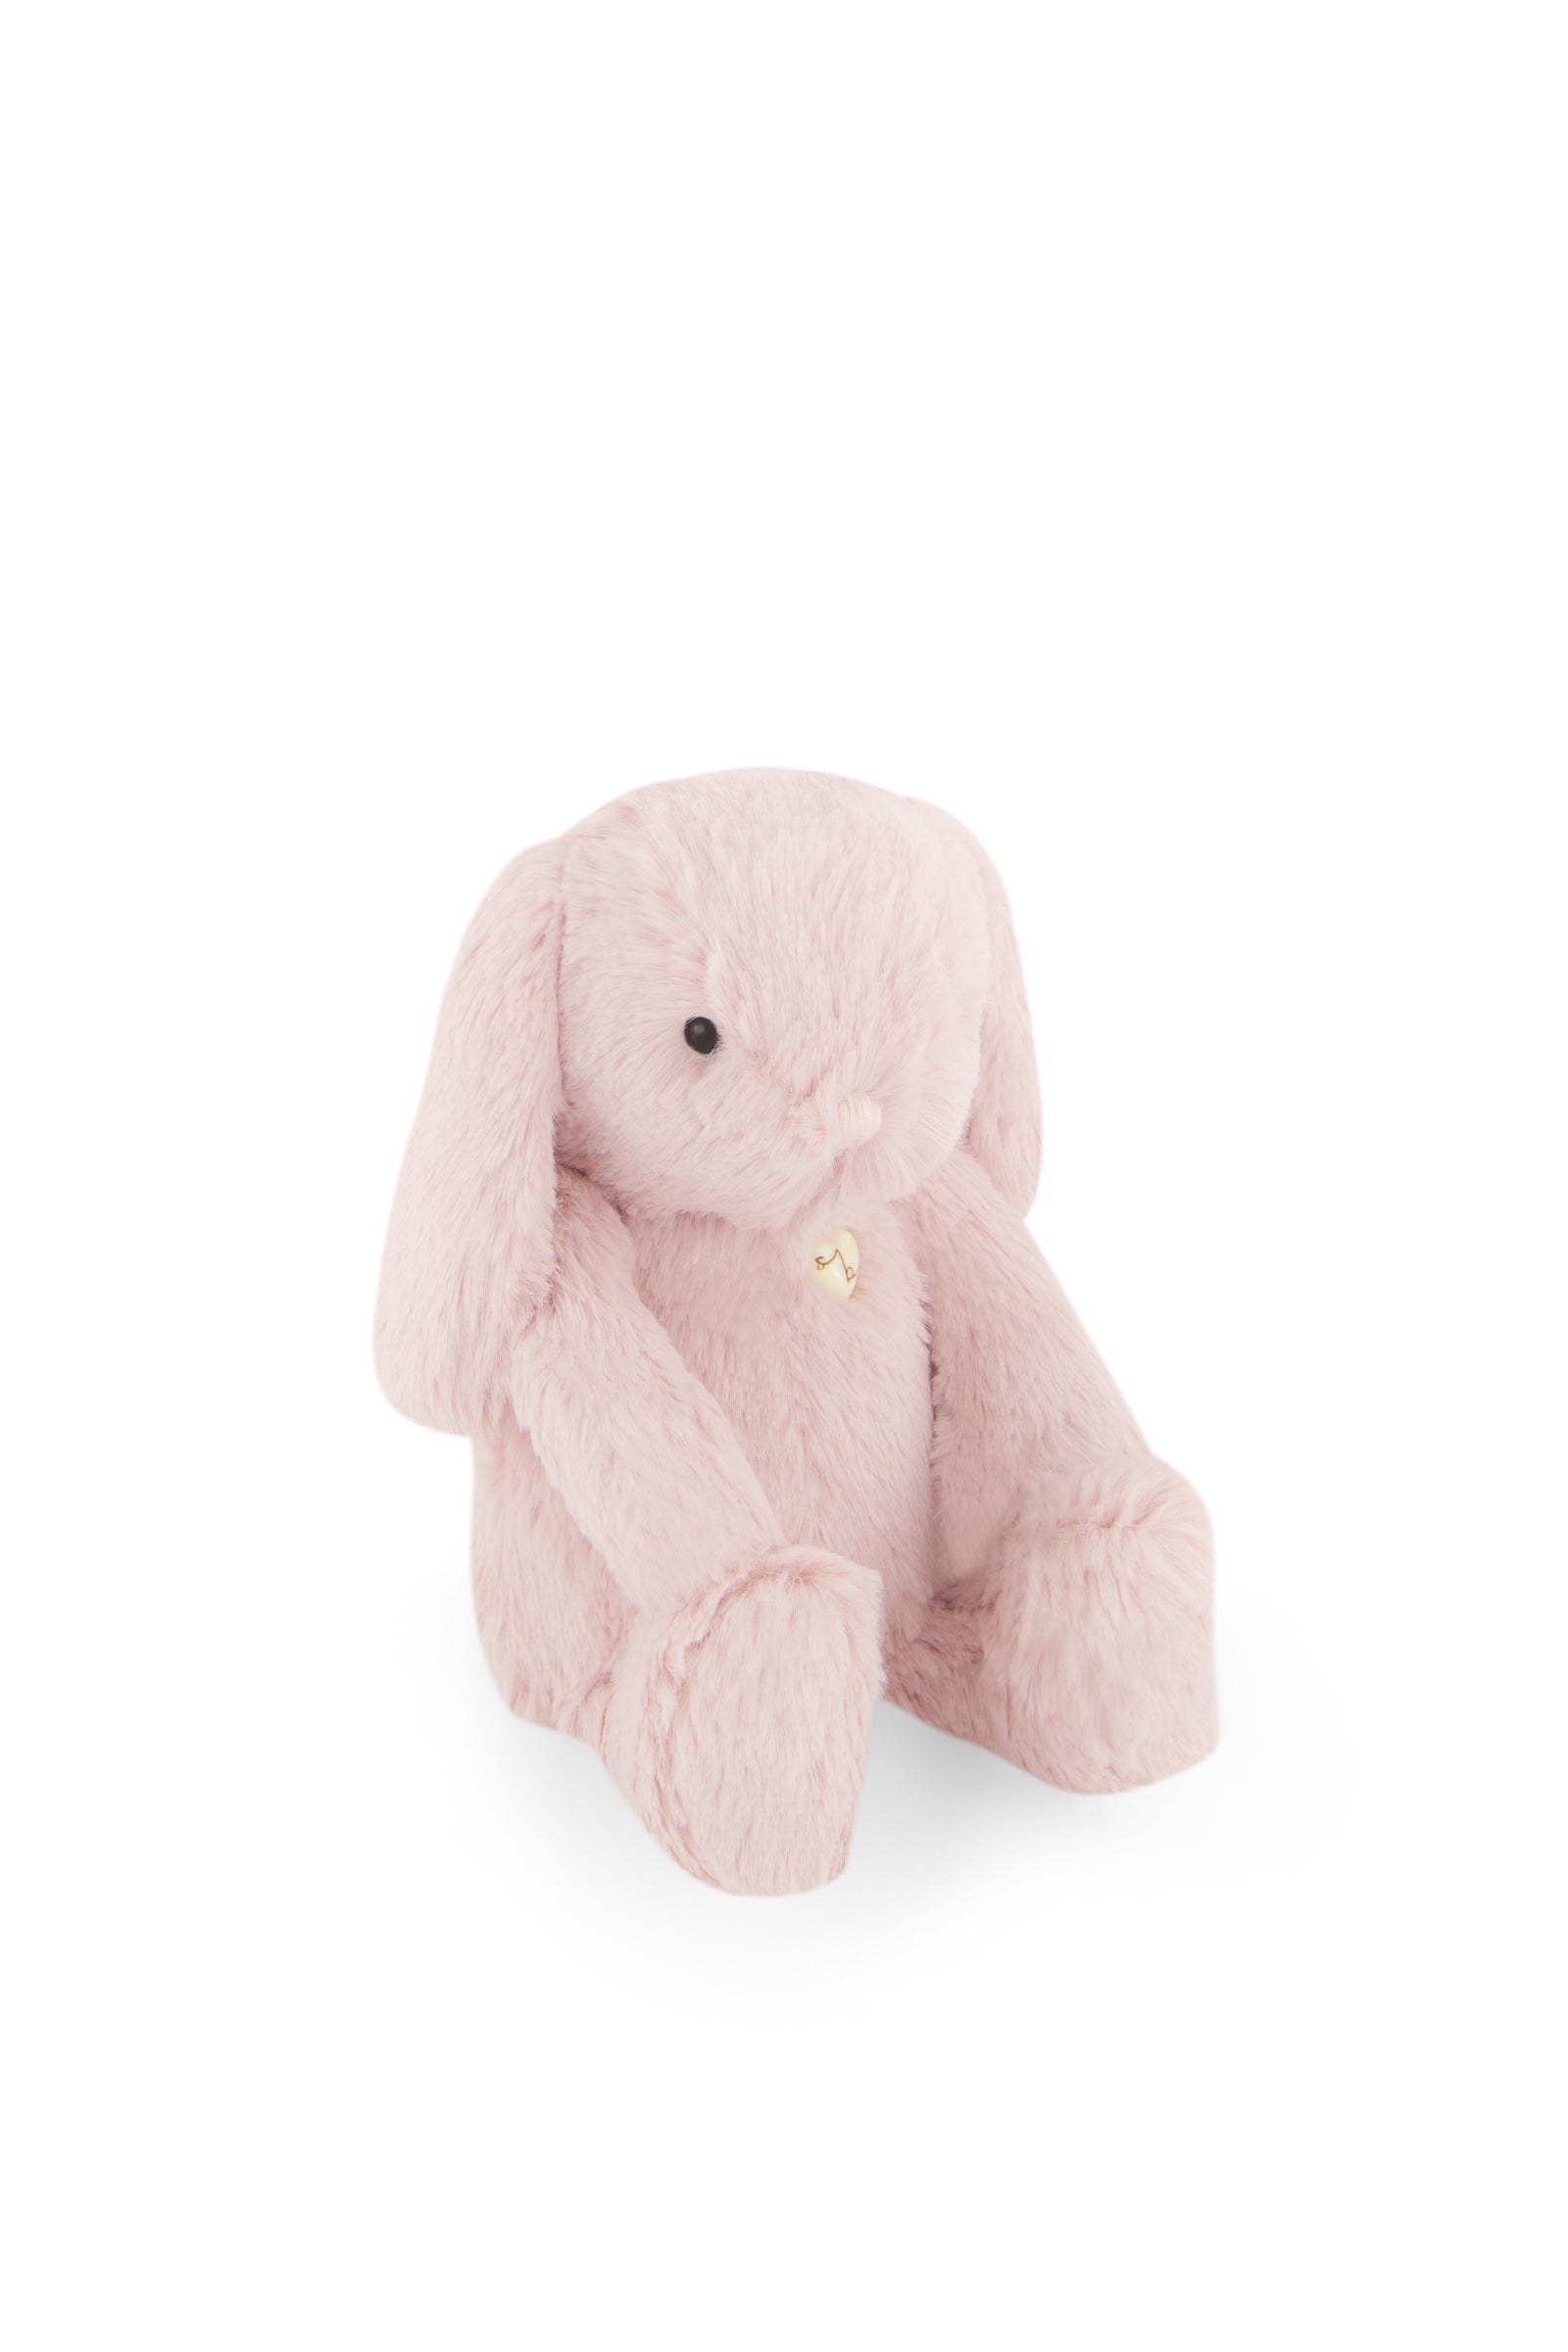 Snuggle Bunnies | Penelope the Bunny | Blush